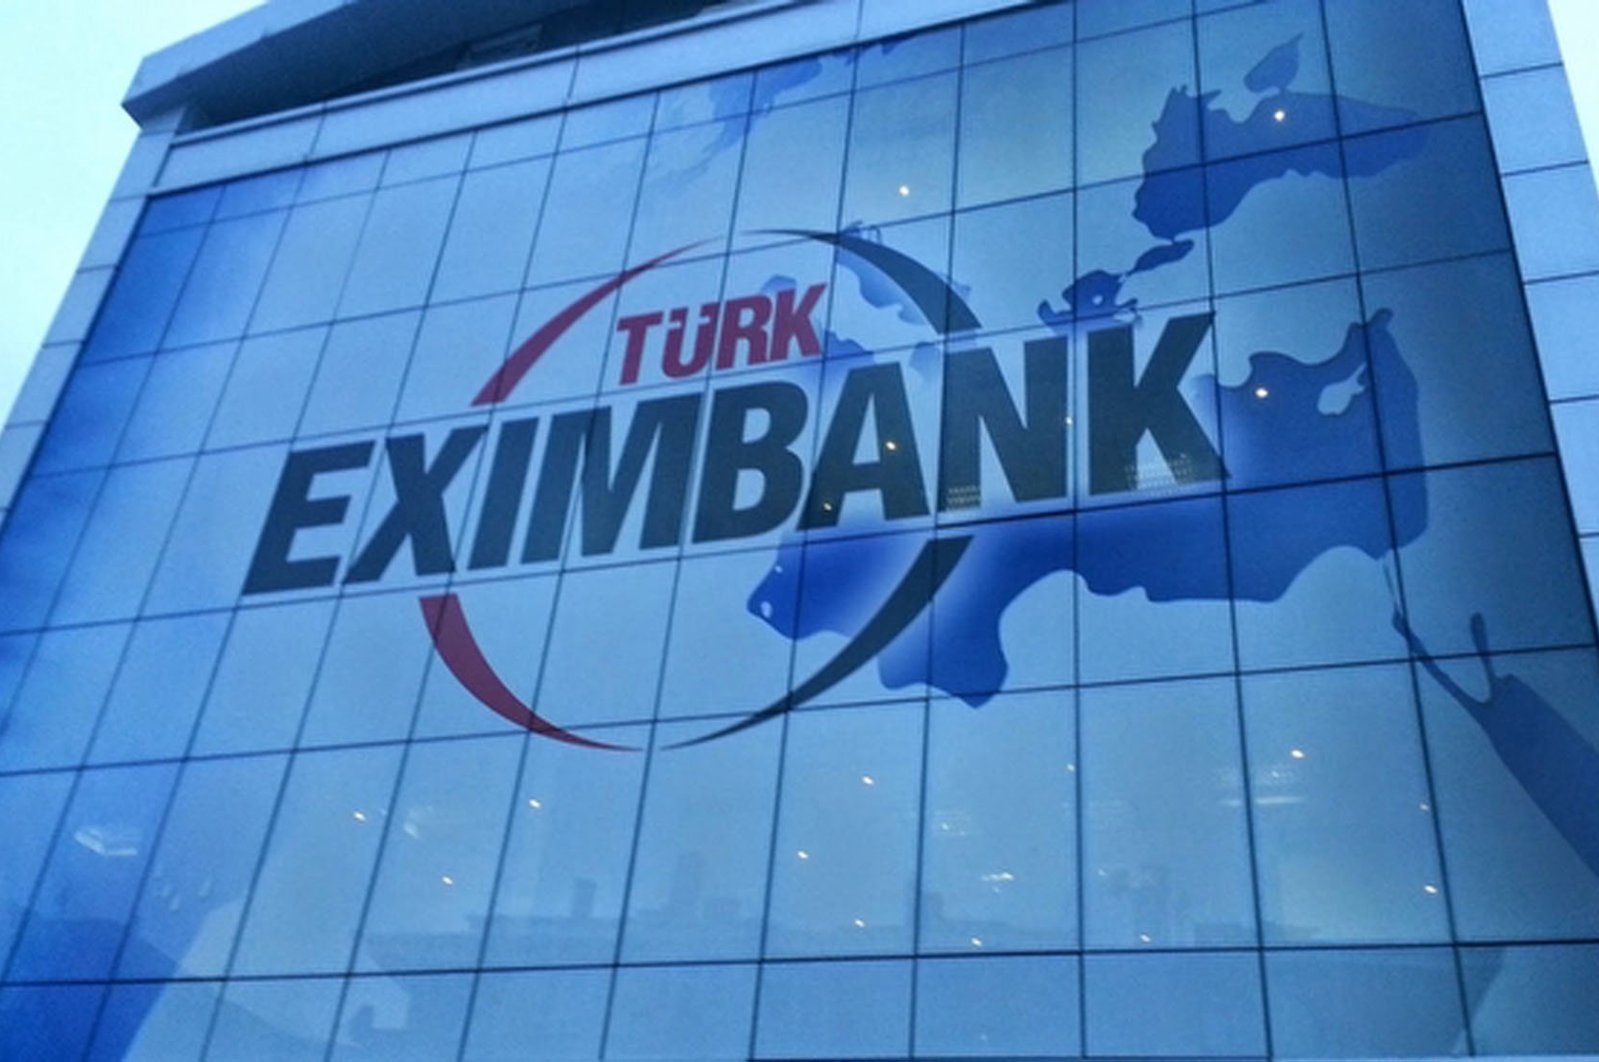 The Türk Eximbank headquarters in Istanbul, Turkey. (File Photo)